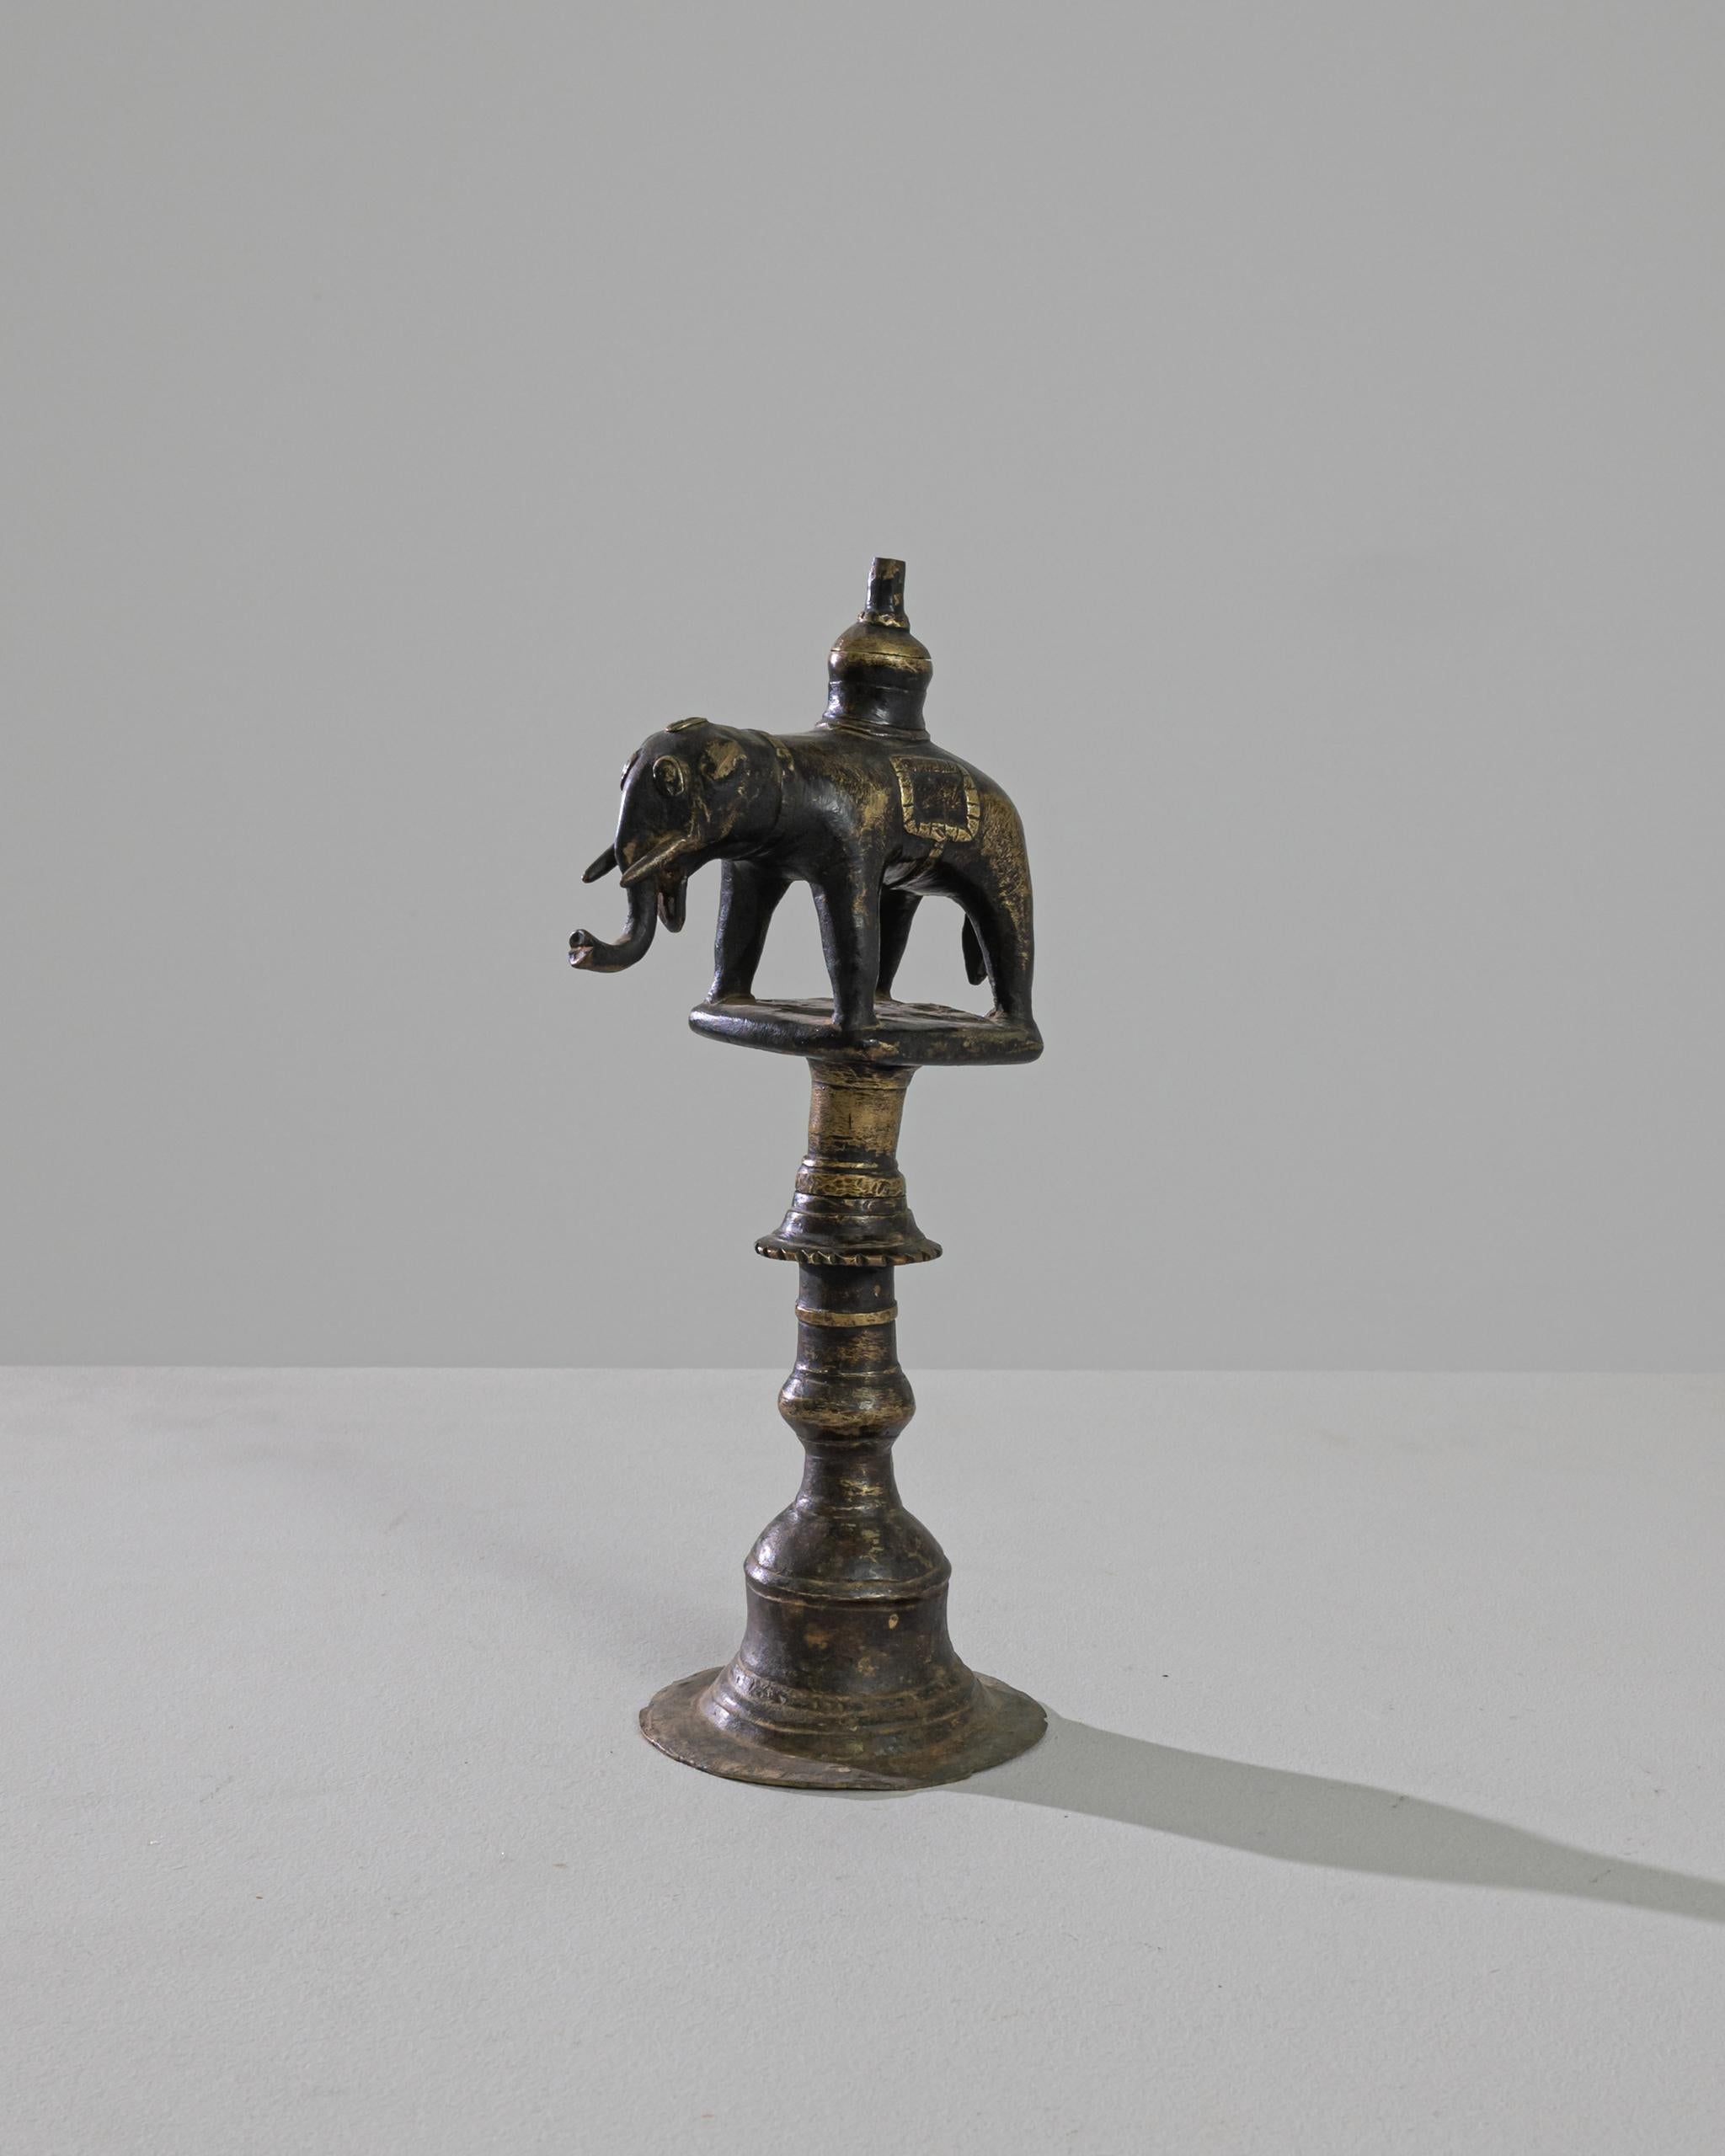 oil lamp statue